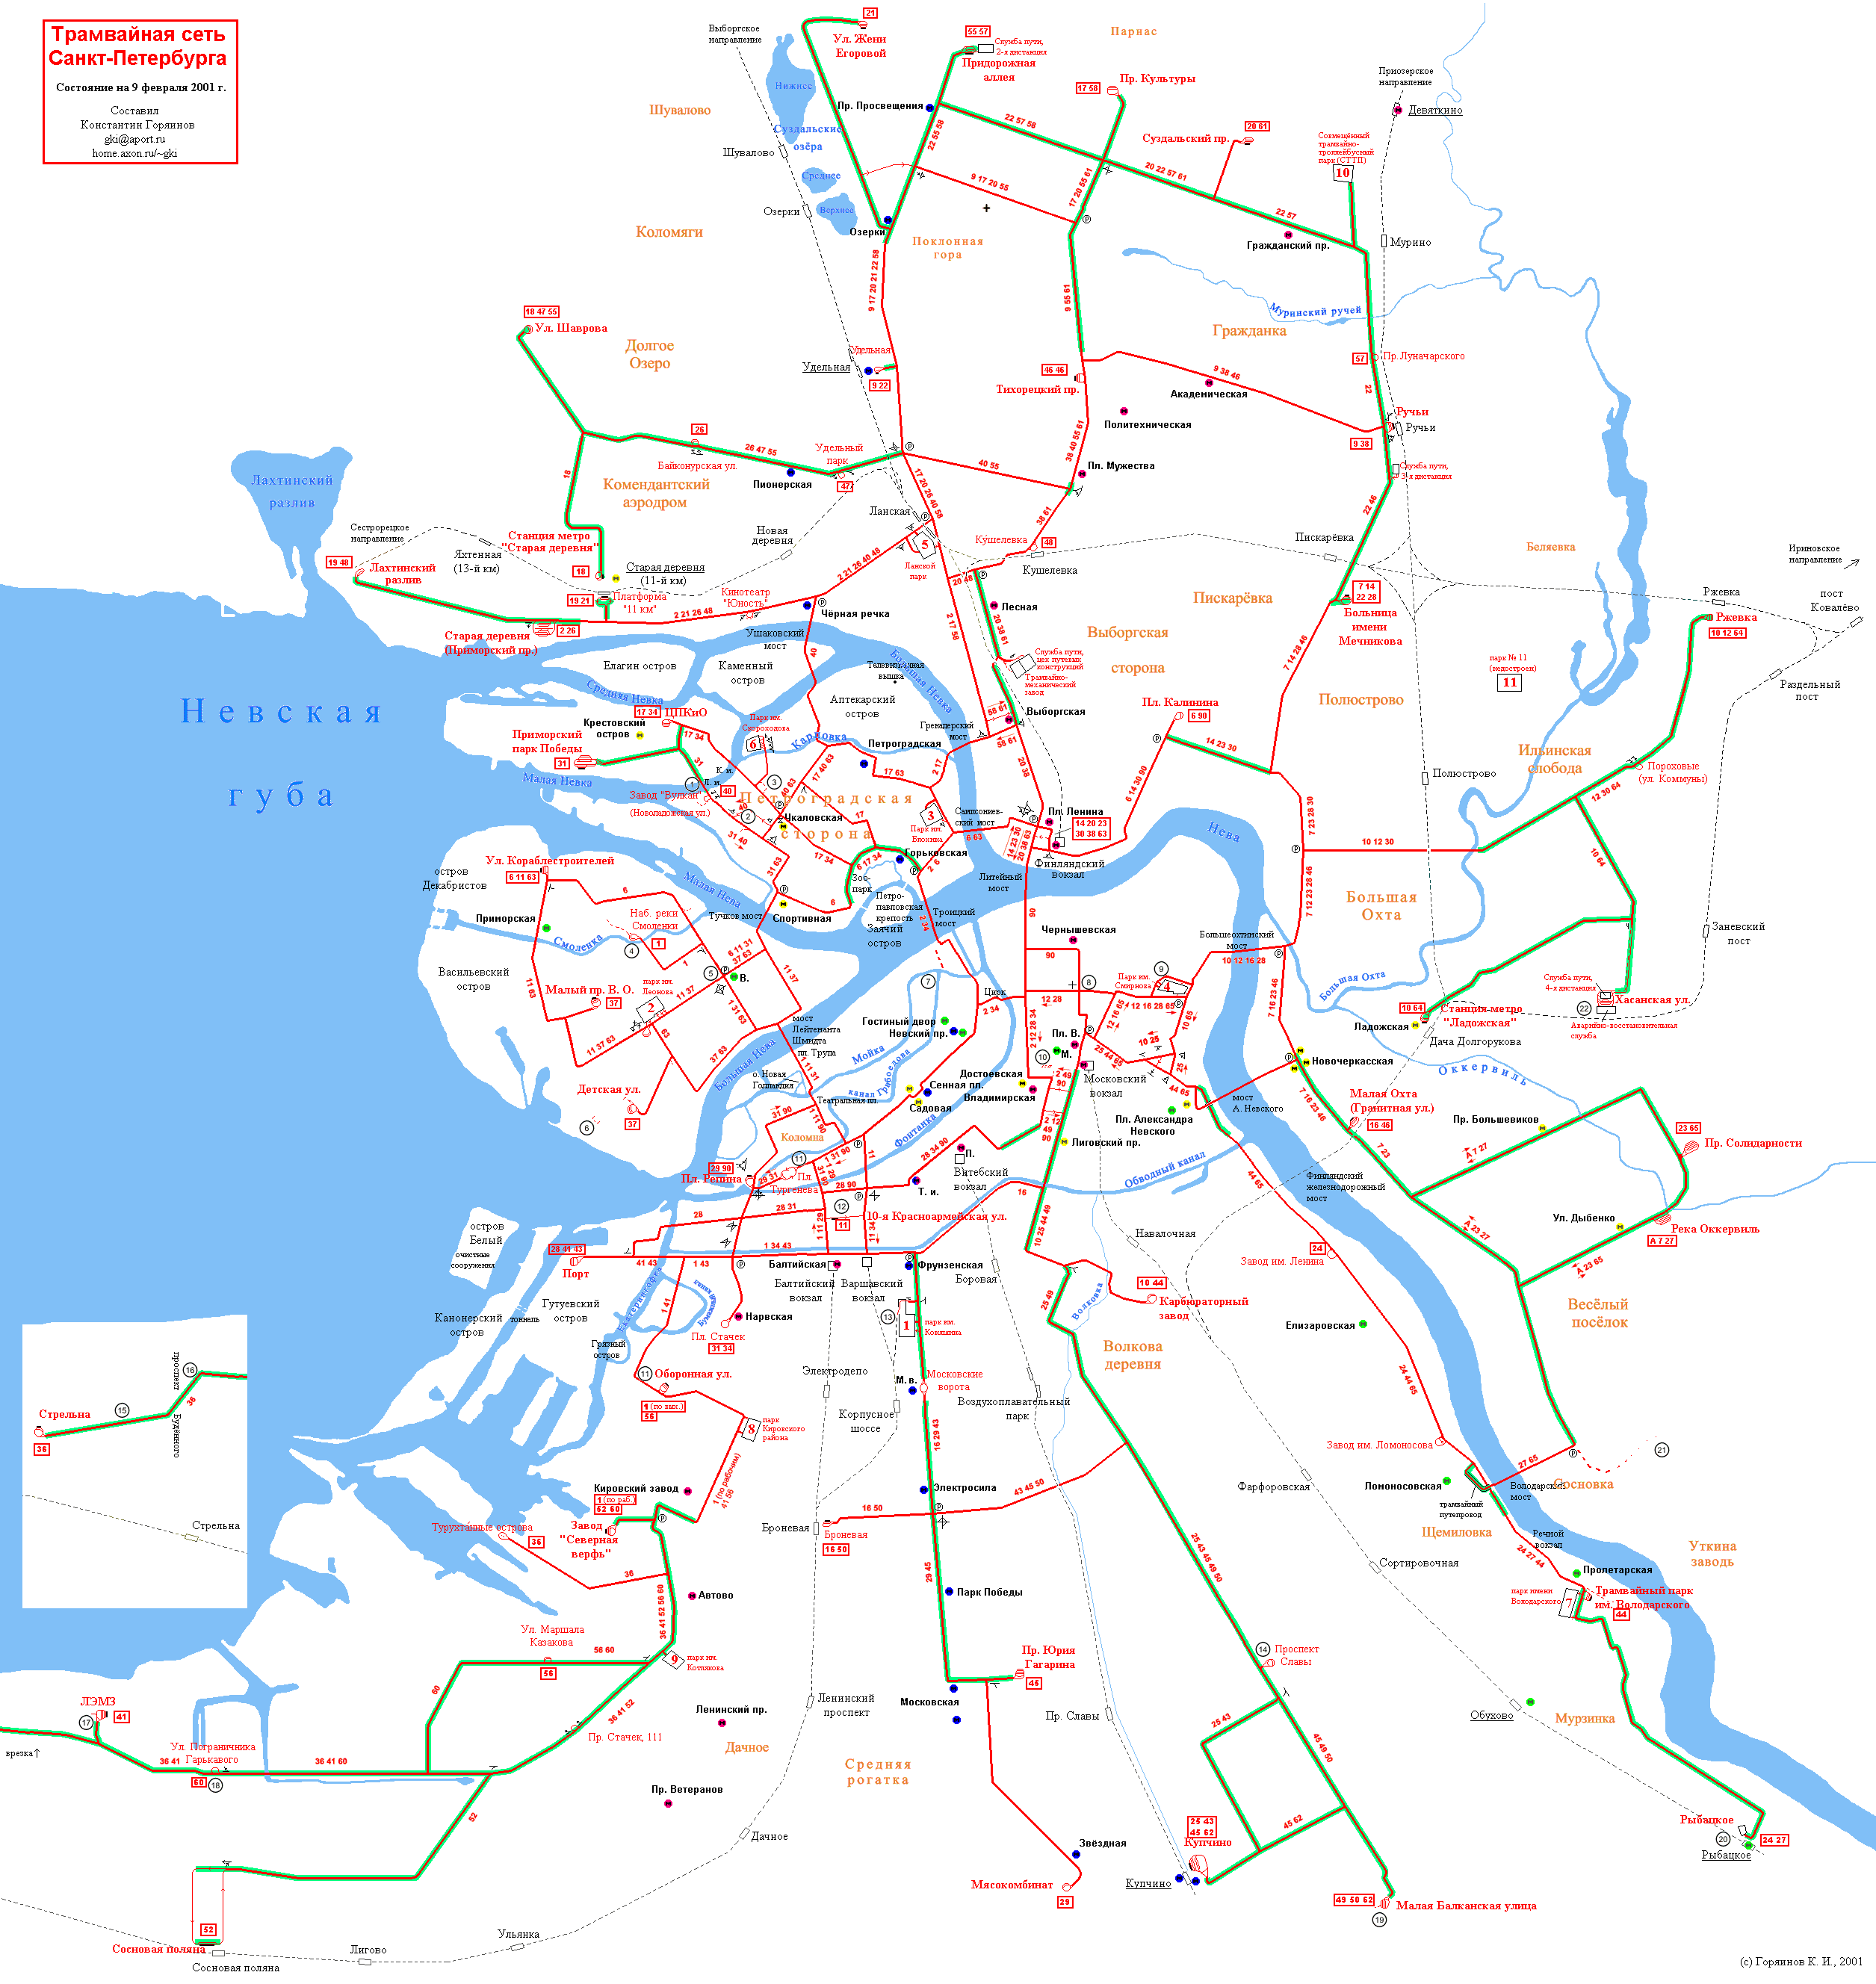 Трамваи, схема трамвайного движения, Санкт-Петербург